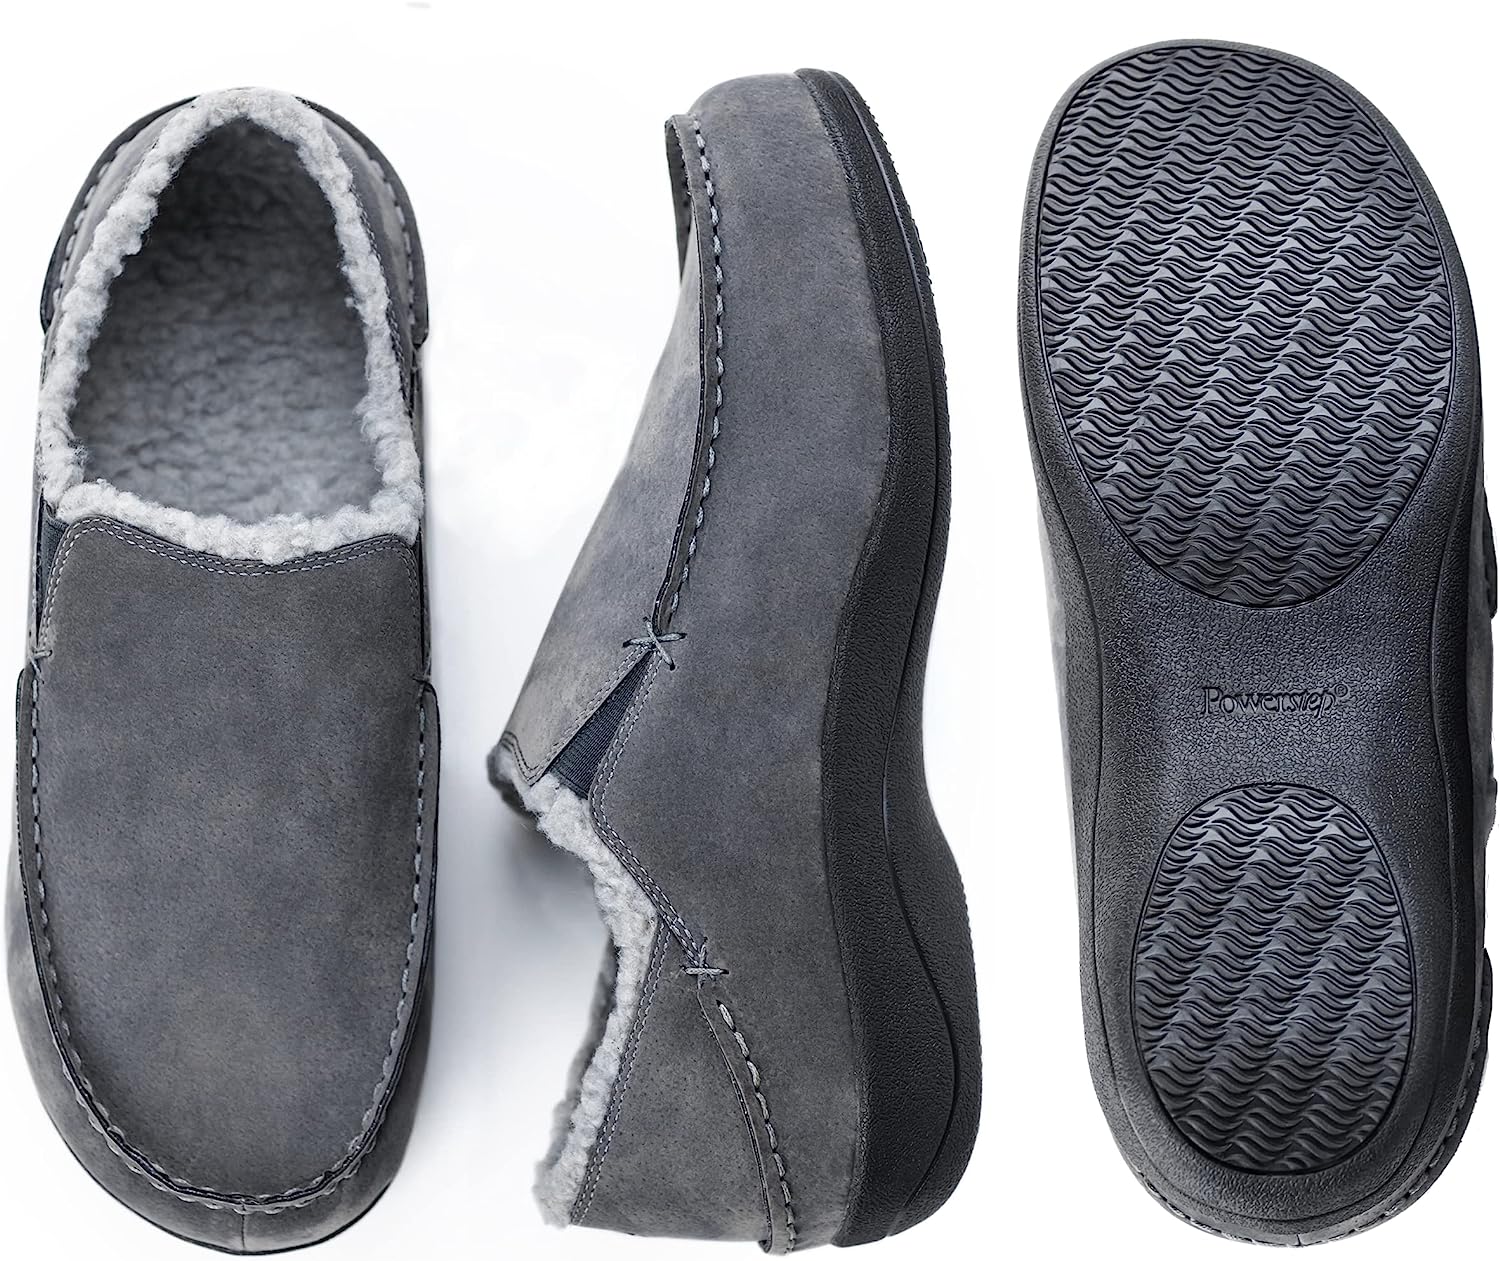 Powerstep Men's ArchWear Slipper, House Shoes, [...]